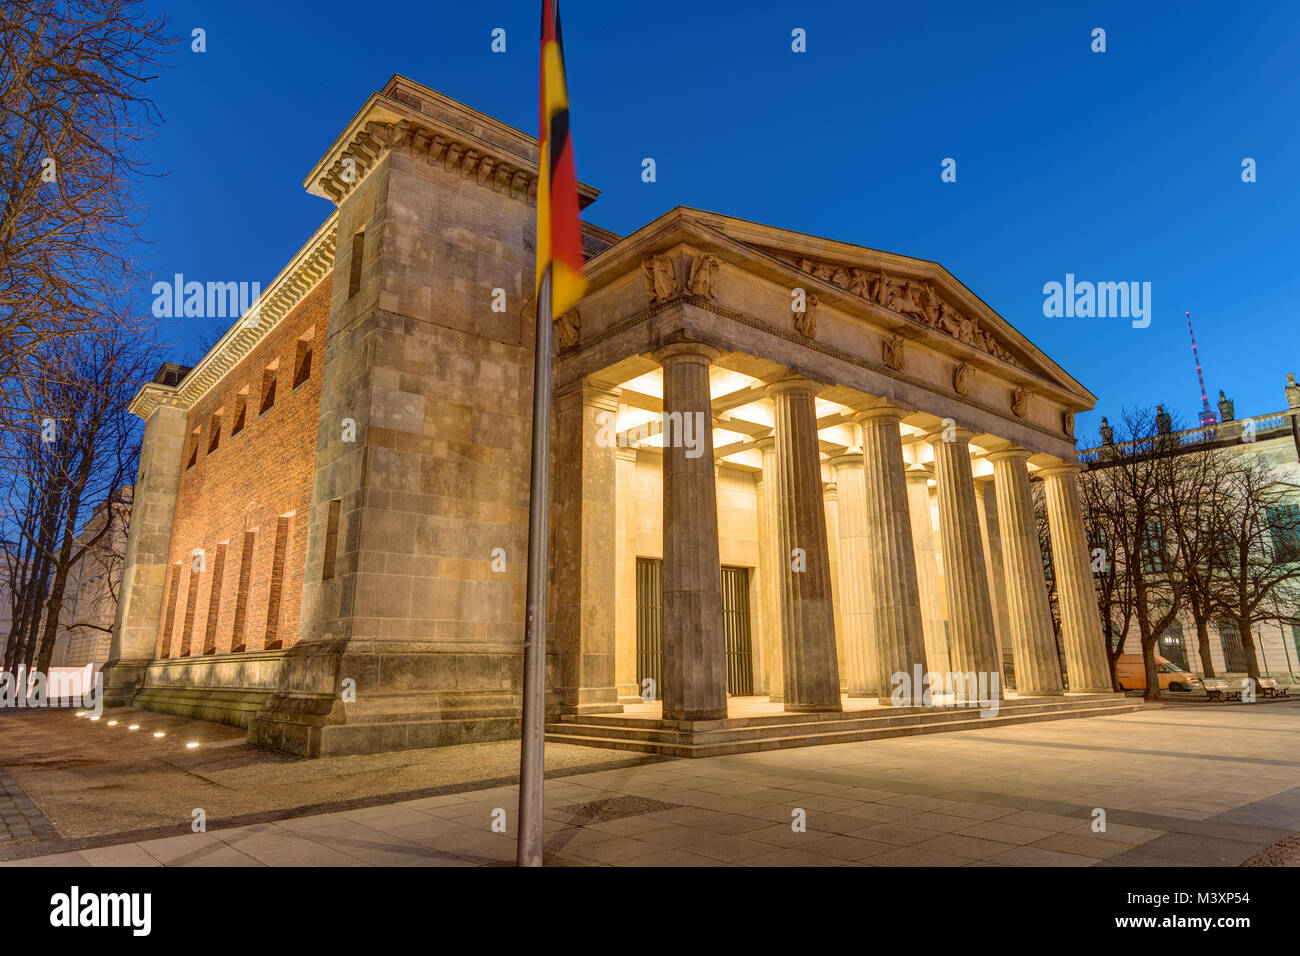 The Neue Wache in Berlin at night Stock Photo